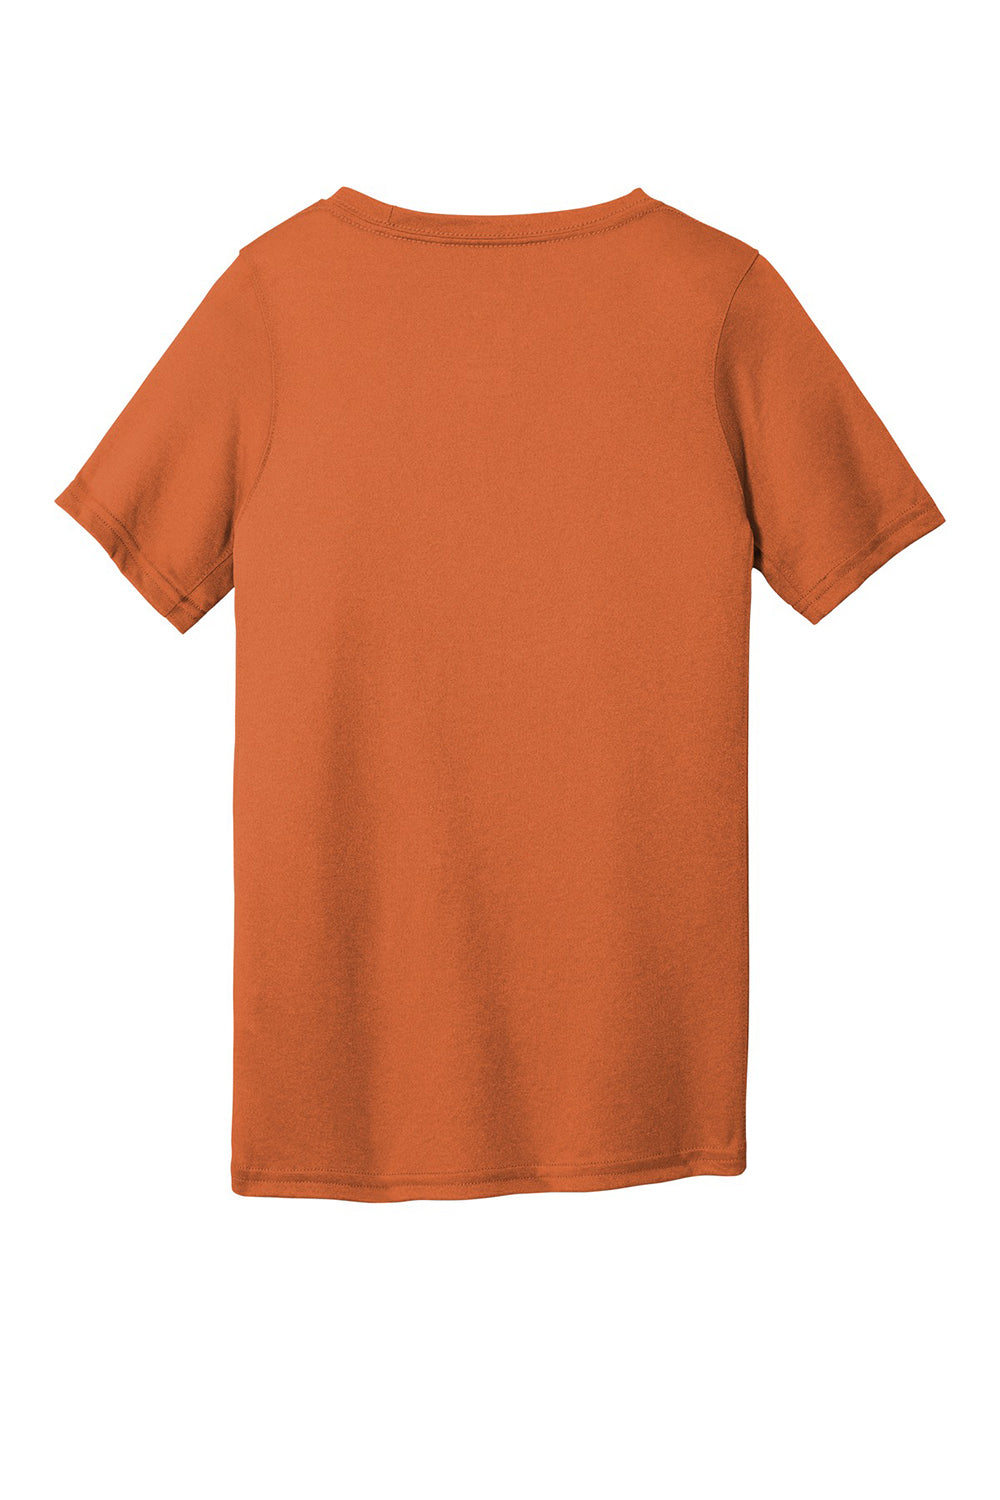 Nike 840178 Youth Legend Dri-Fit Moisture Wicking Short Sleeve Crewneck T-Shirt Desert Orange Flat Back